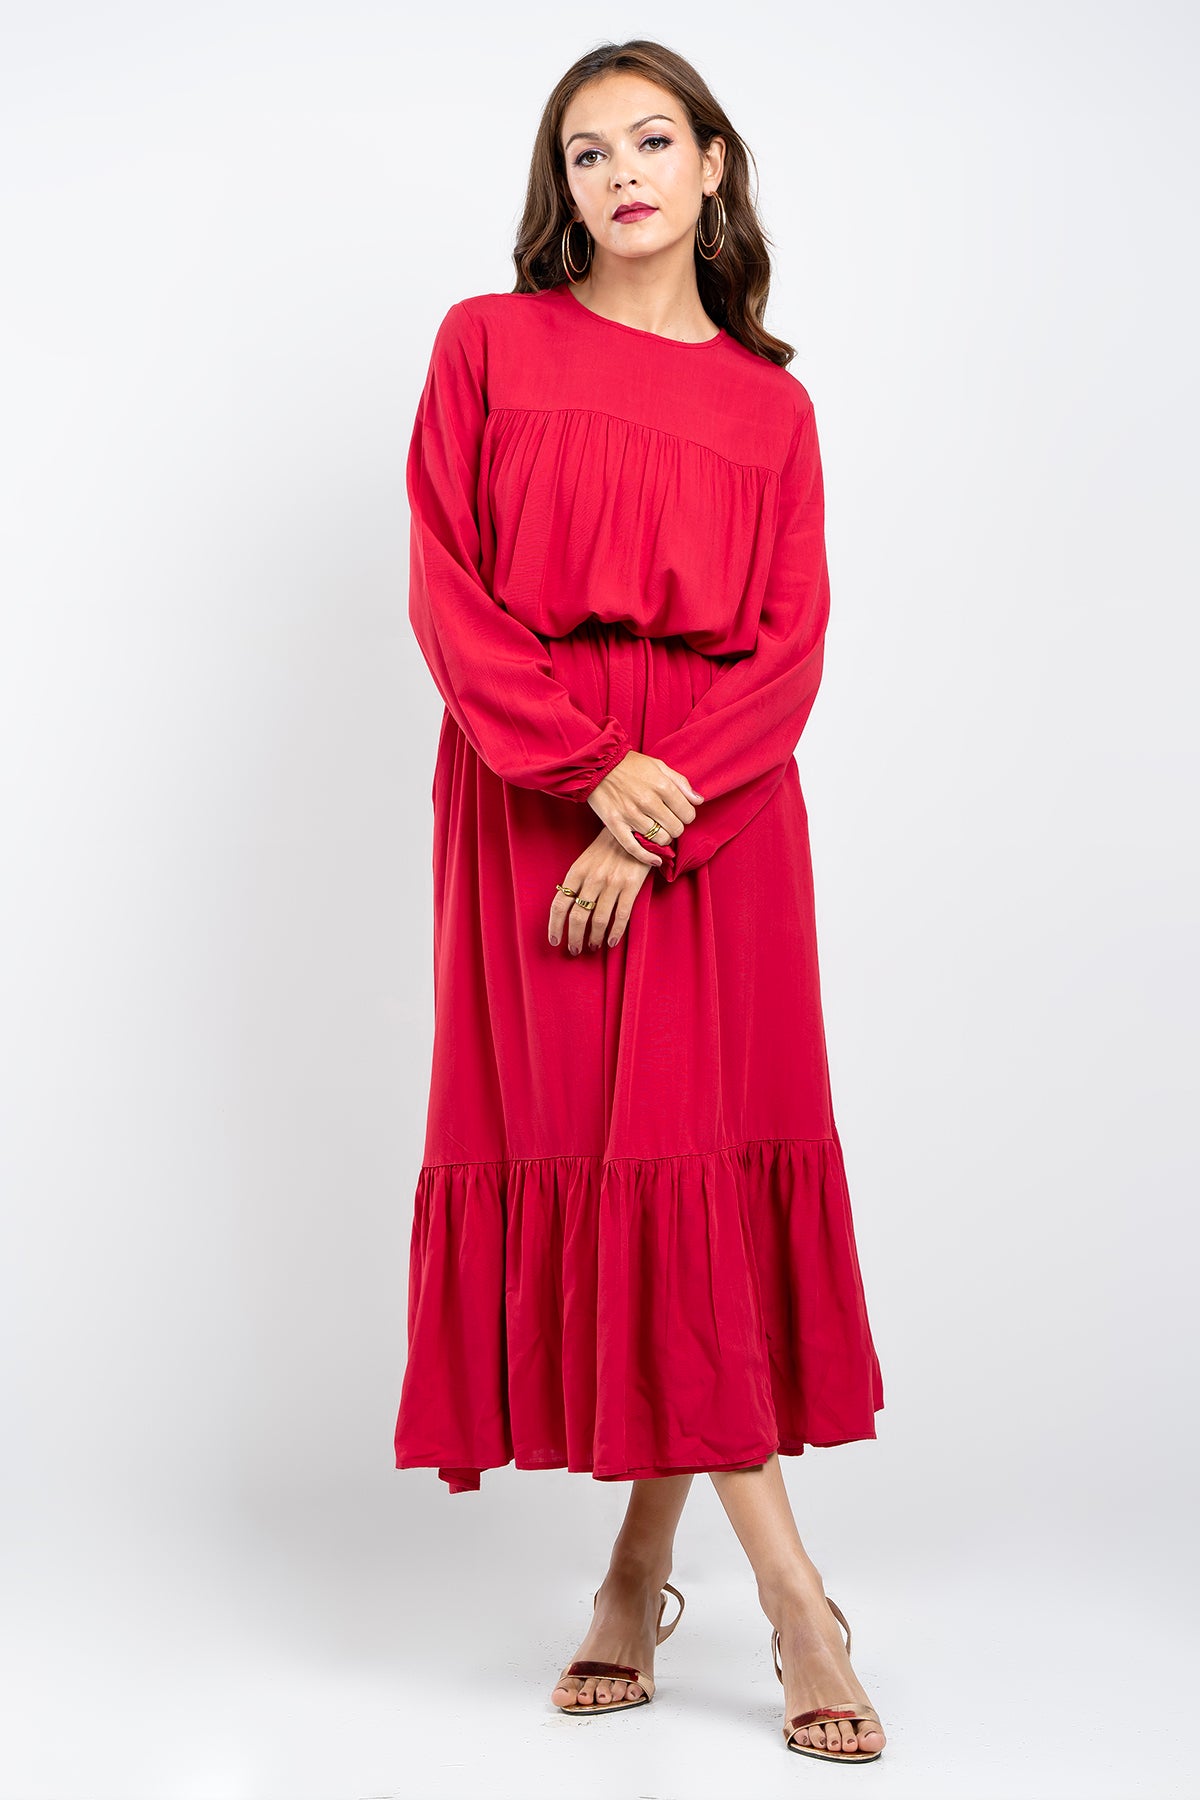 Hada Women's Long Sleeve Casual  Dress